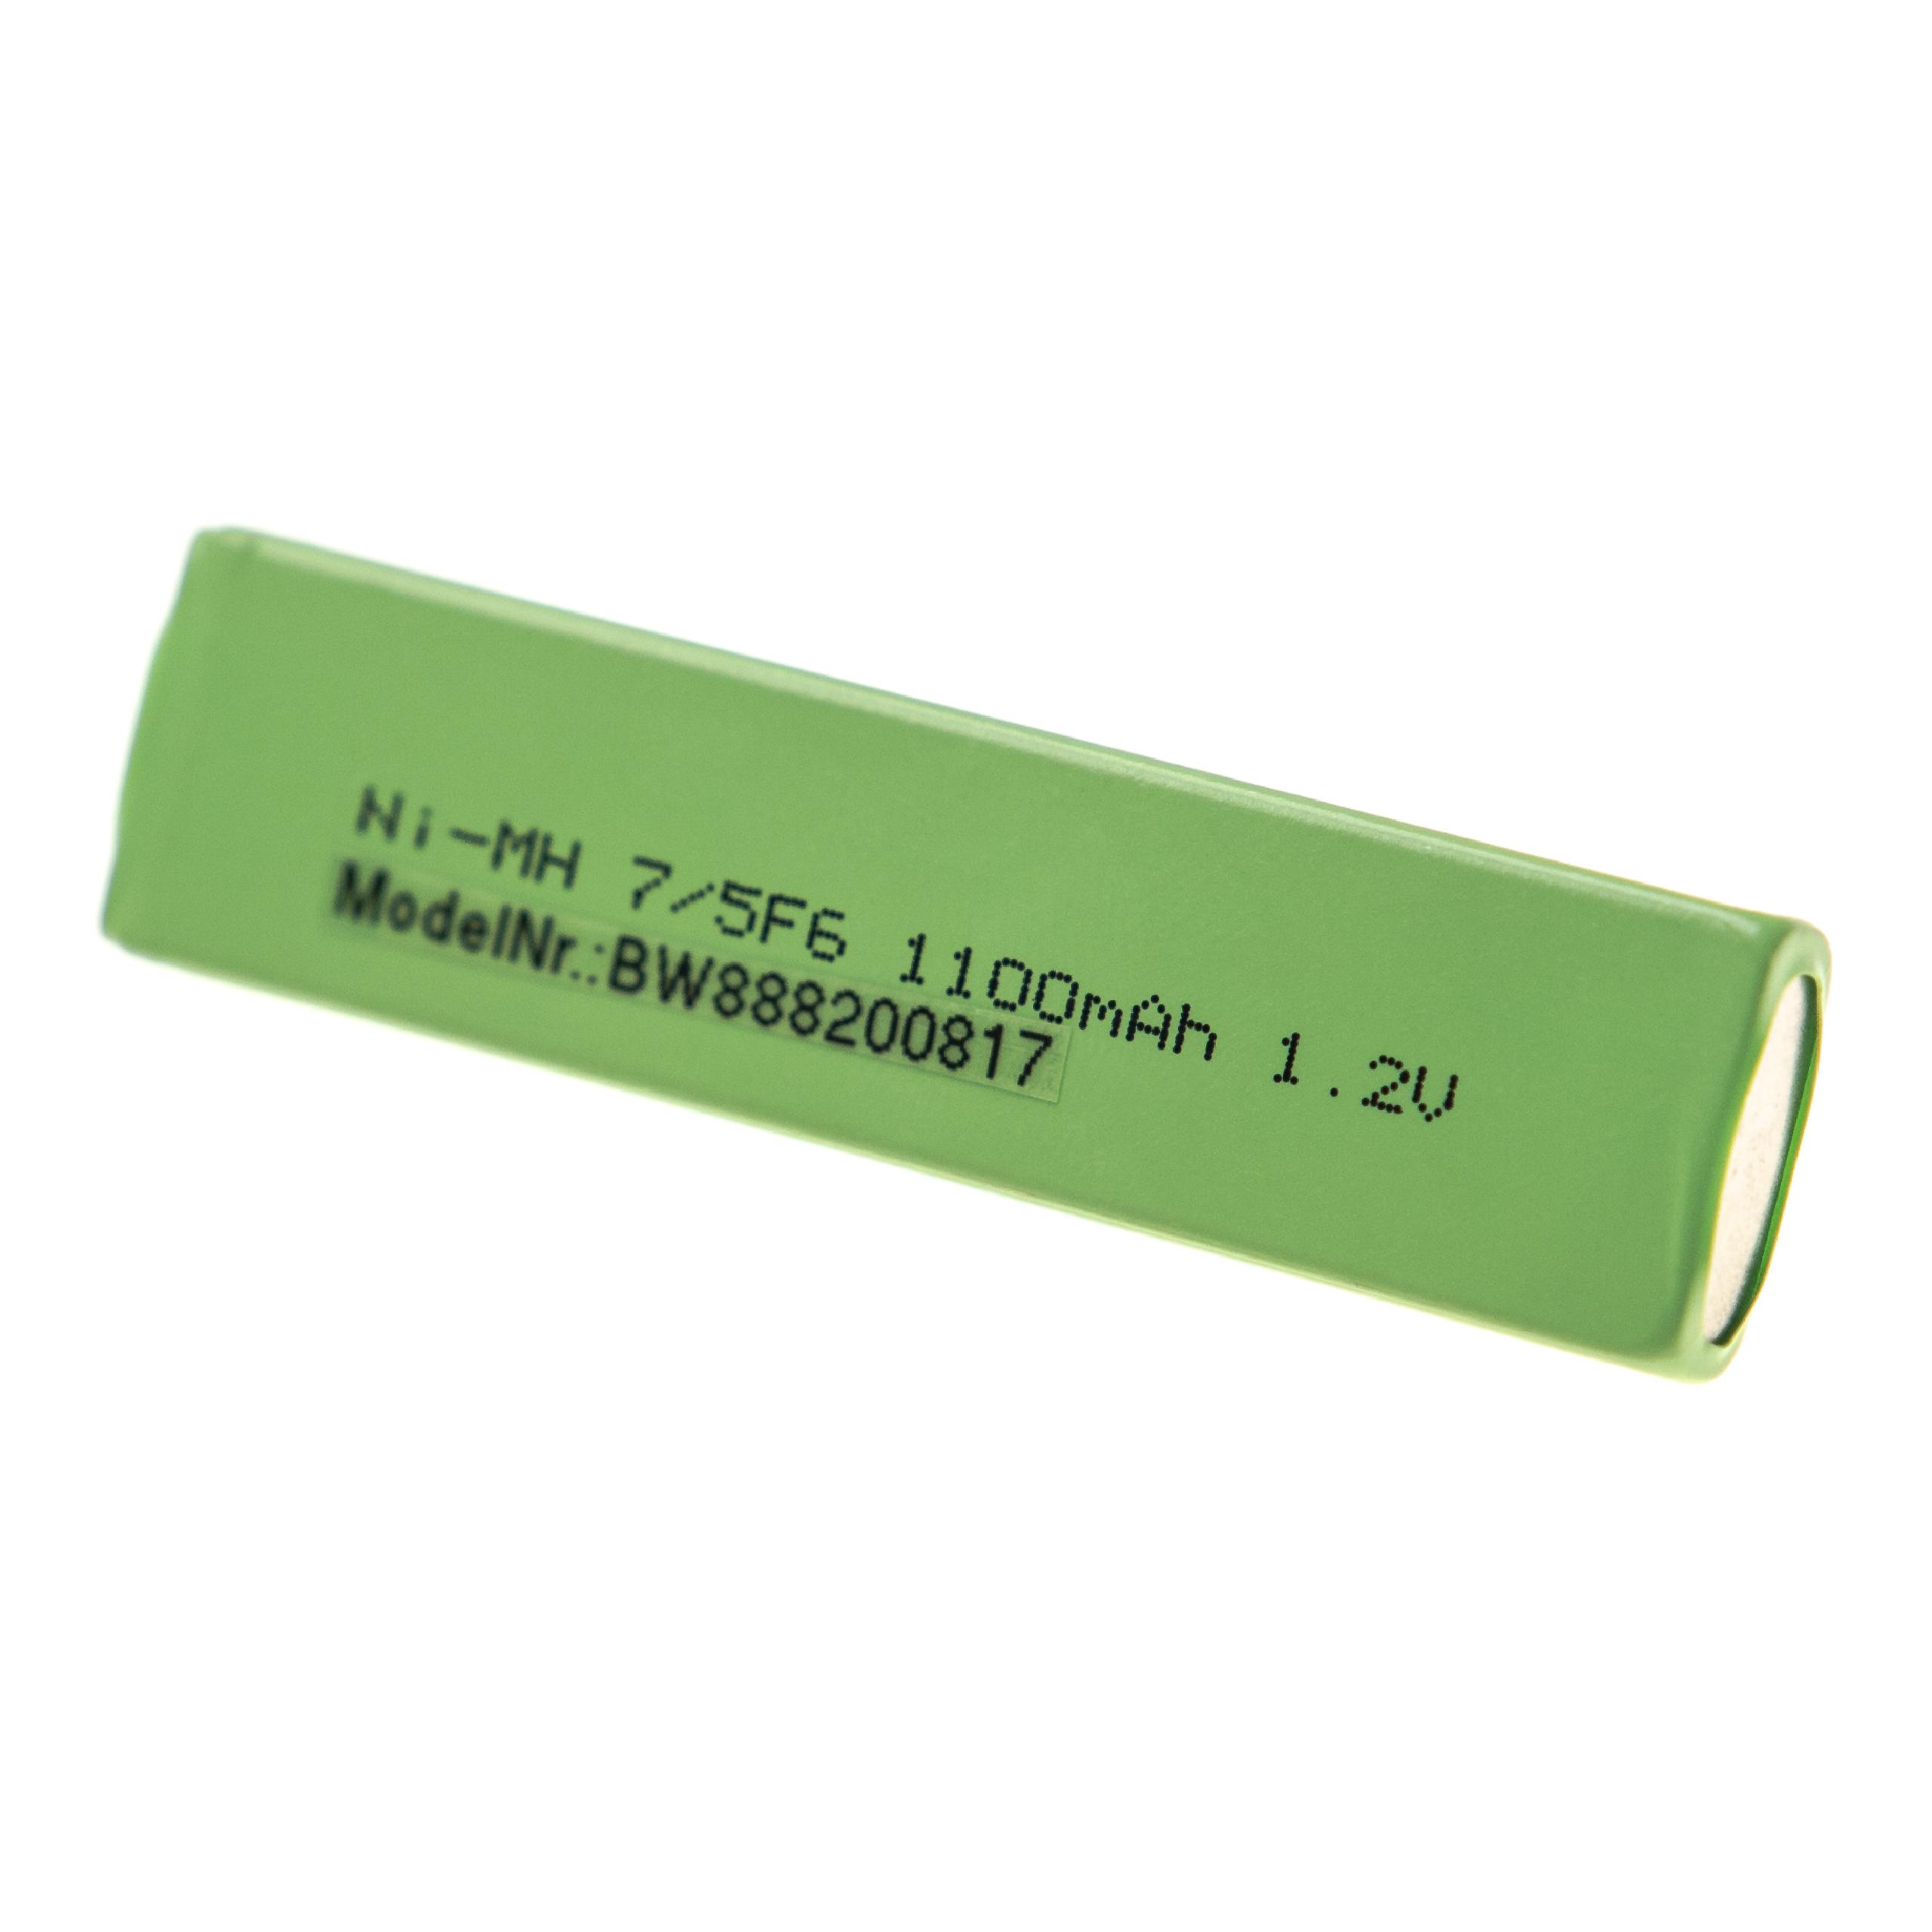 Batterie remplace Aiwa MHB-901 pour baladeur CD ou MiniDisc - 1100mAh 1,2V NiMH, 7/5F6, Bouton top